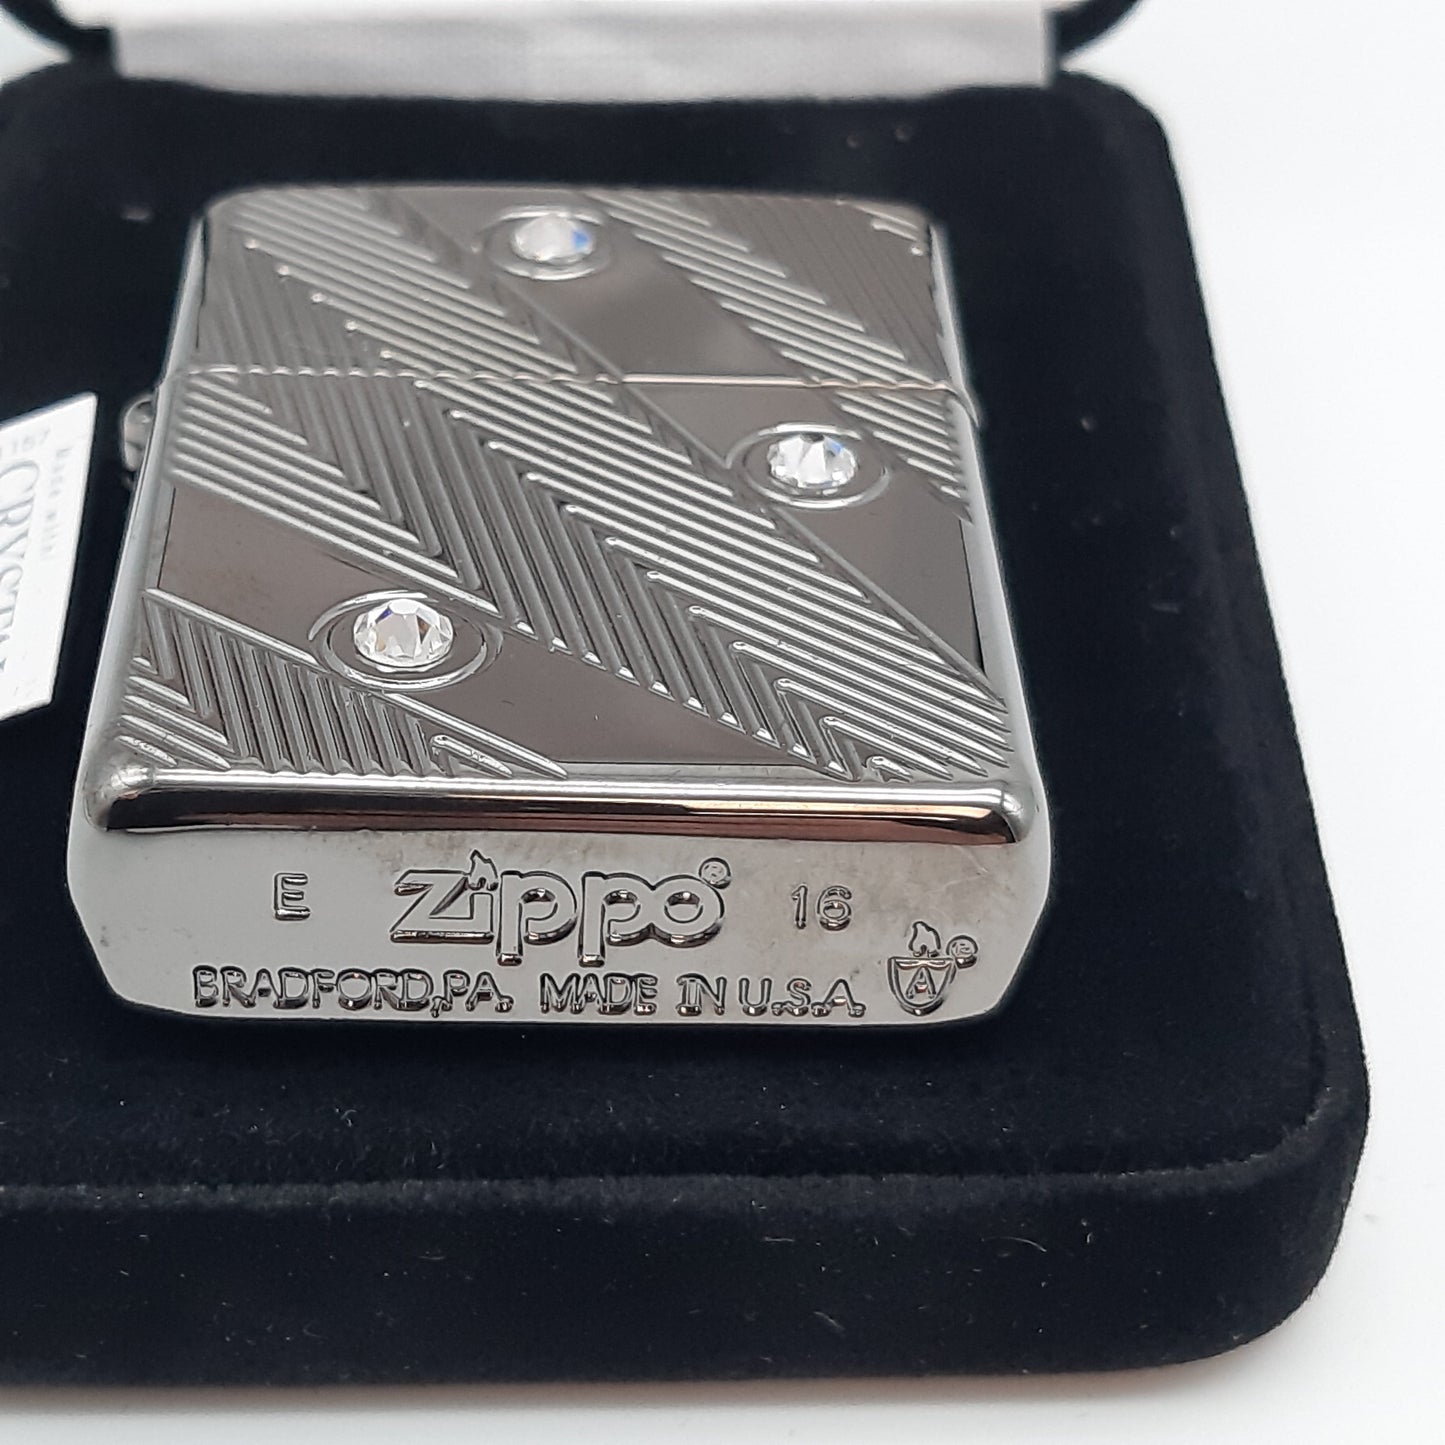 Zippo Zippo Benzinfeuerzeug Collectible  2016 - Europe - Limited Edition XXX/1000